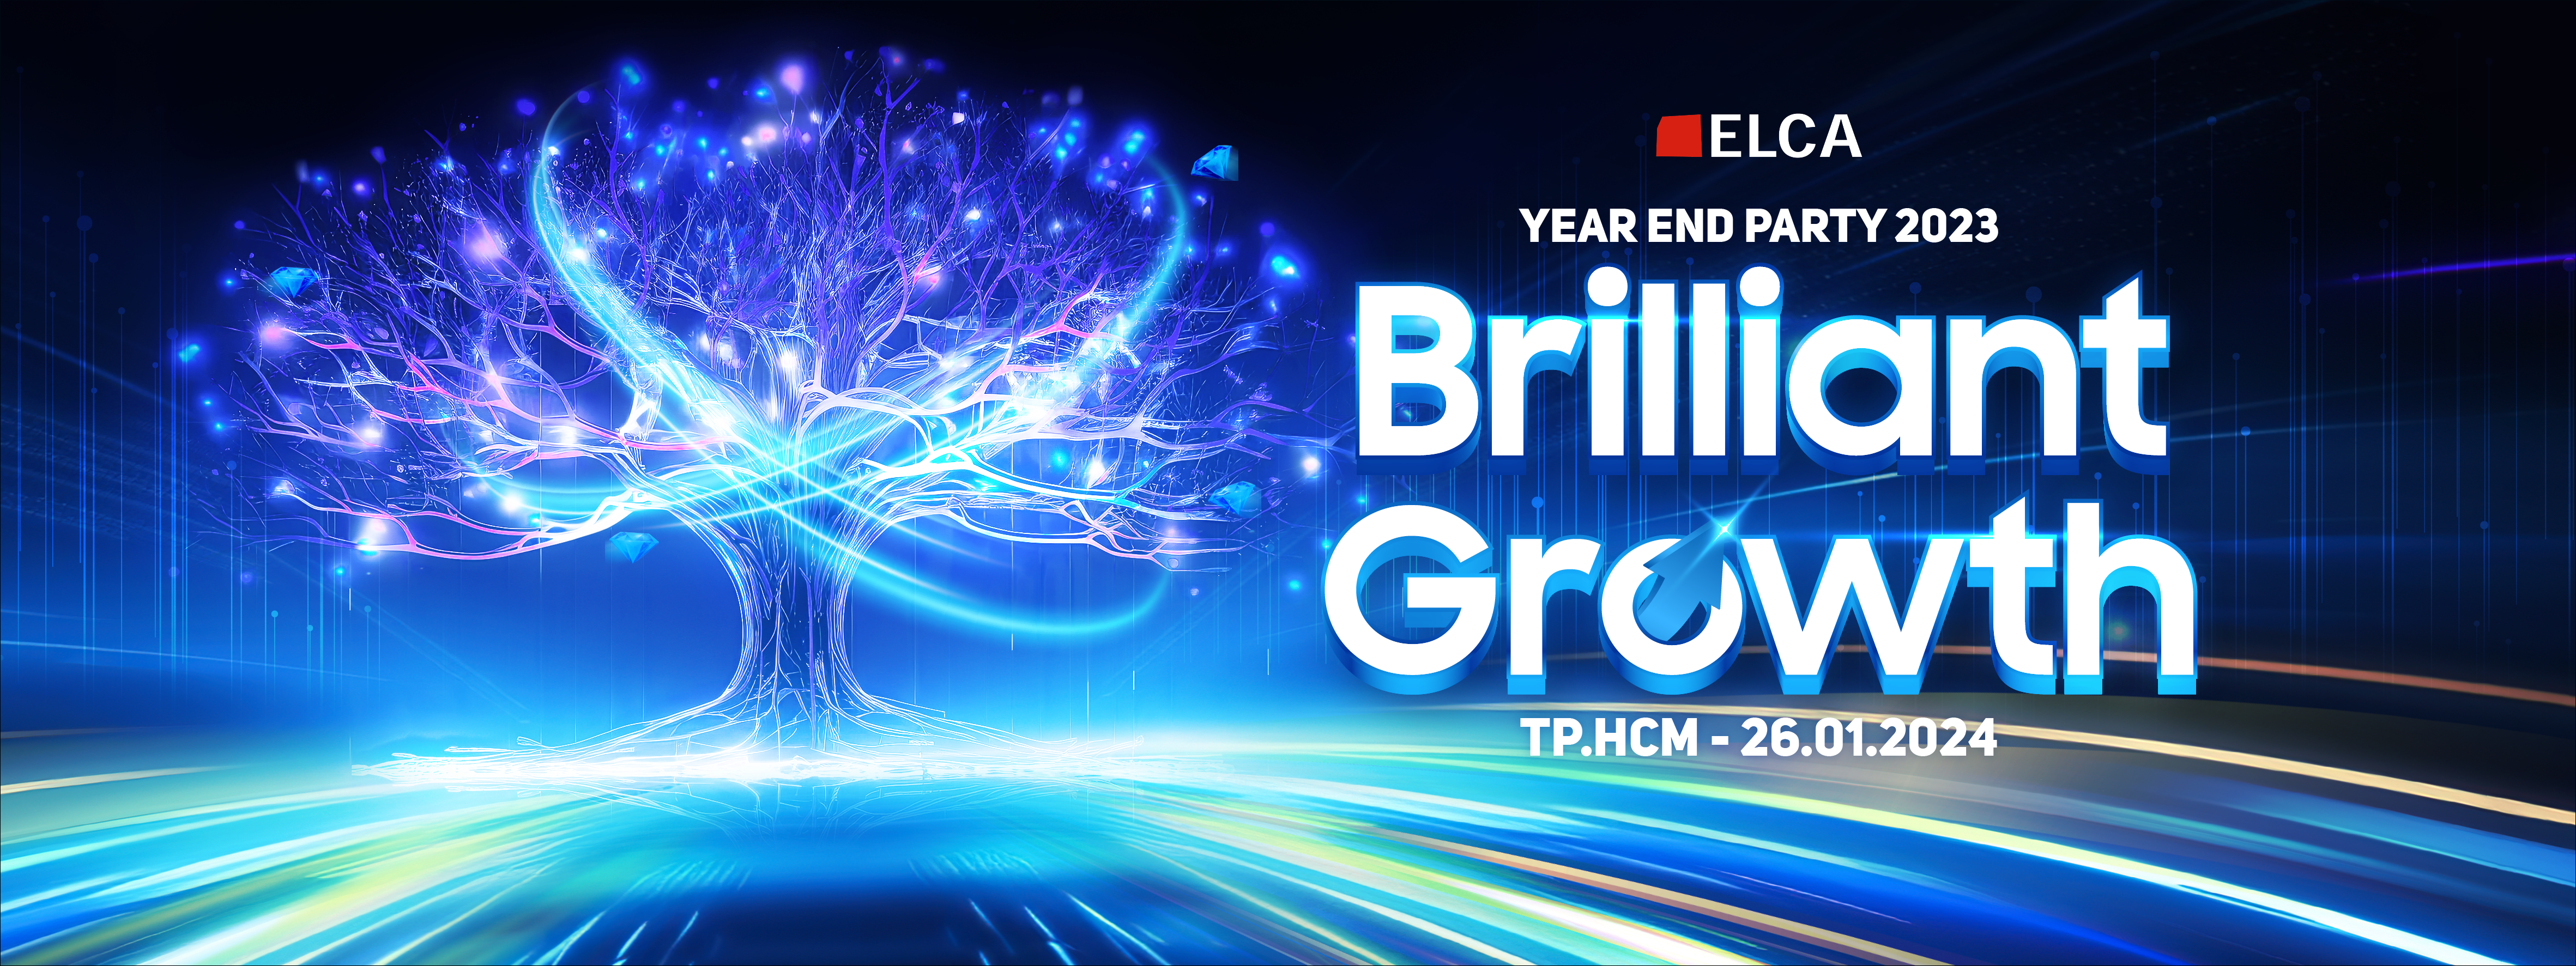 Elca Year End Party 2023 Brilliant Growth